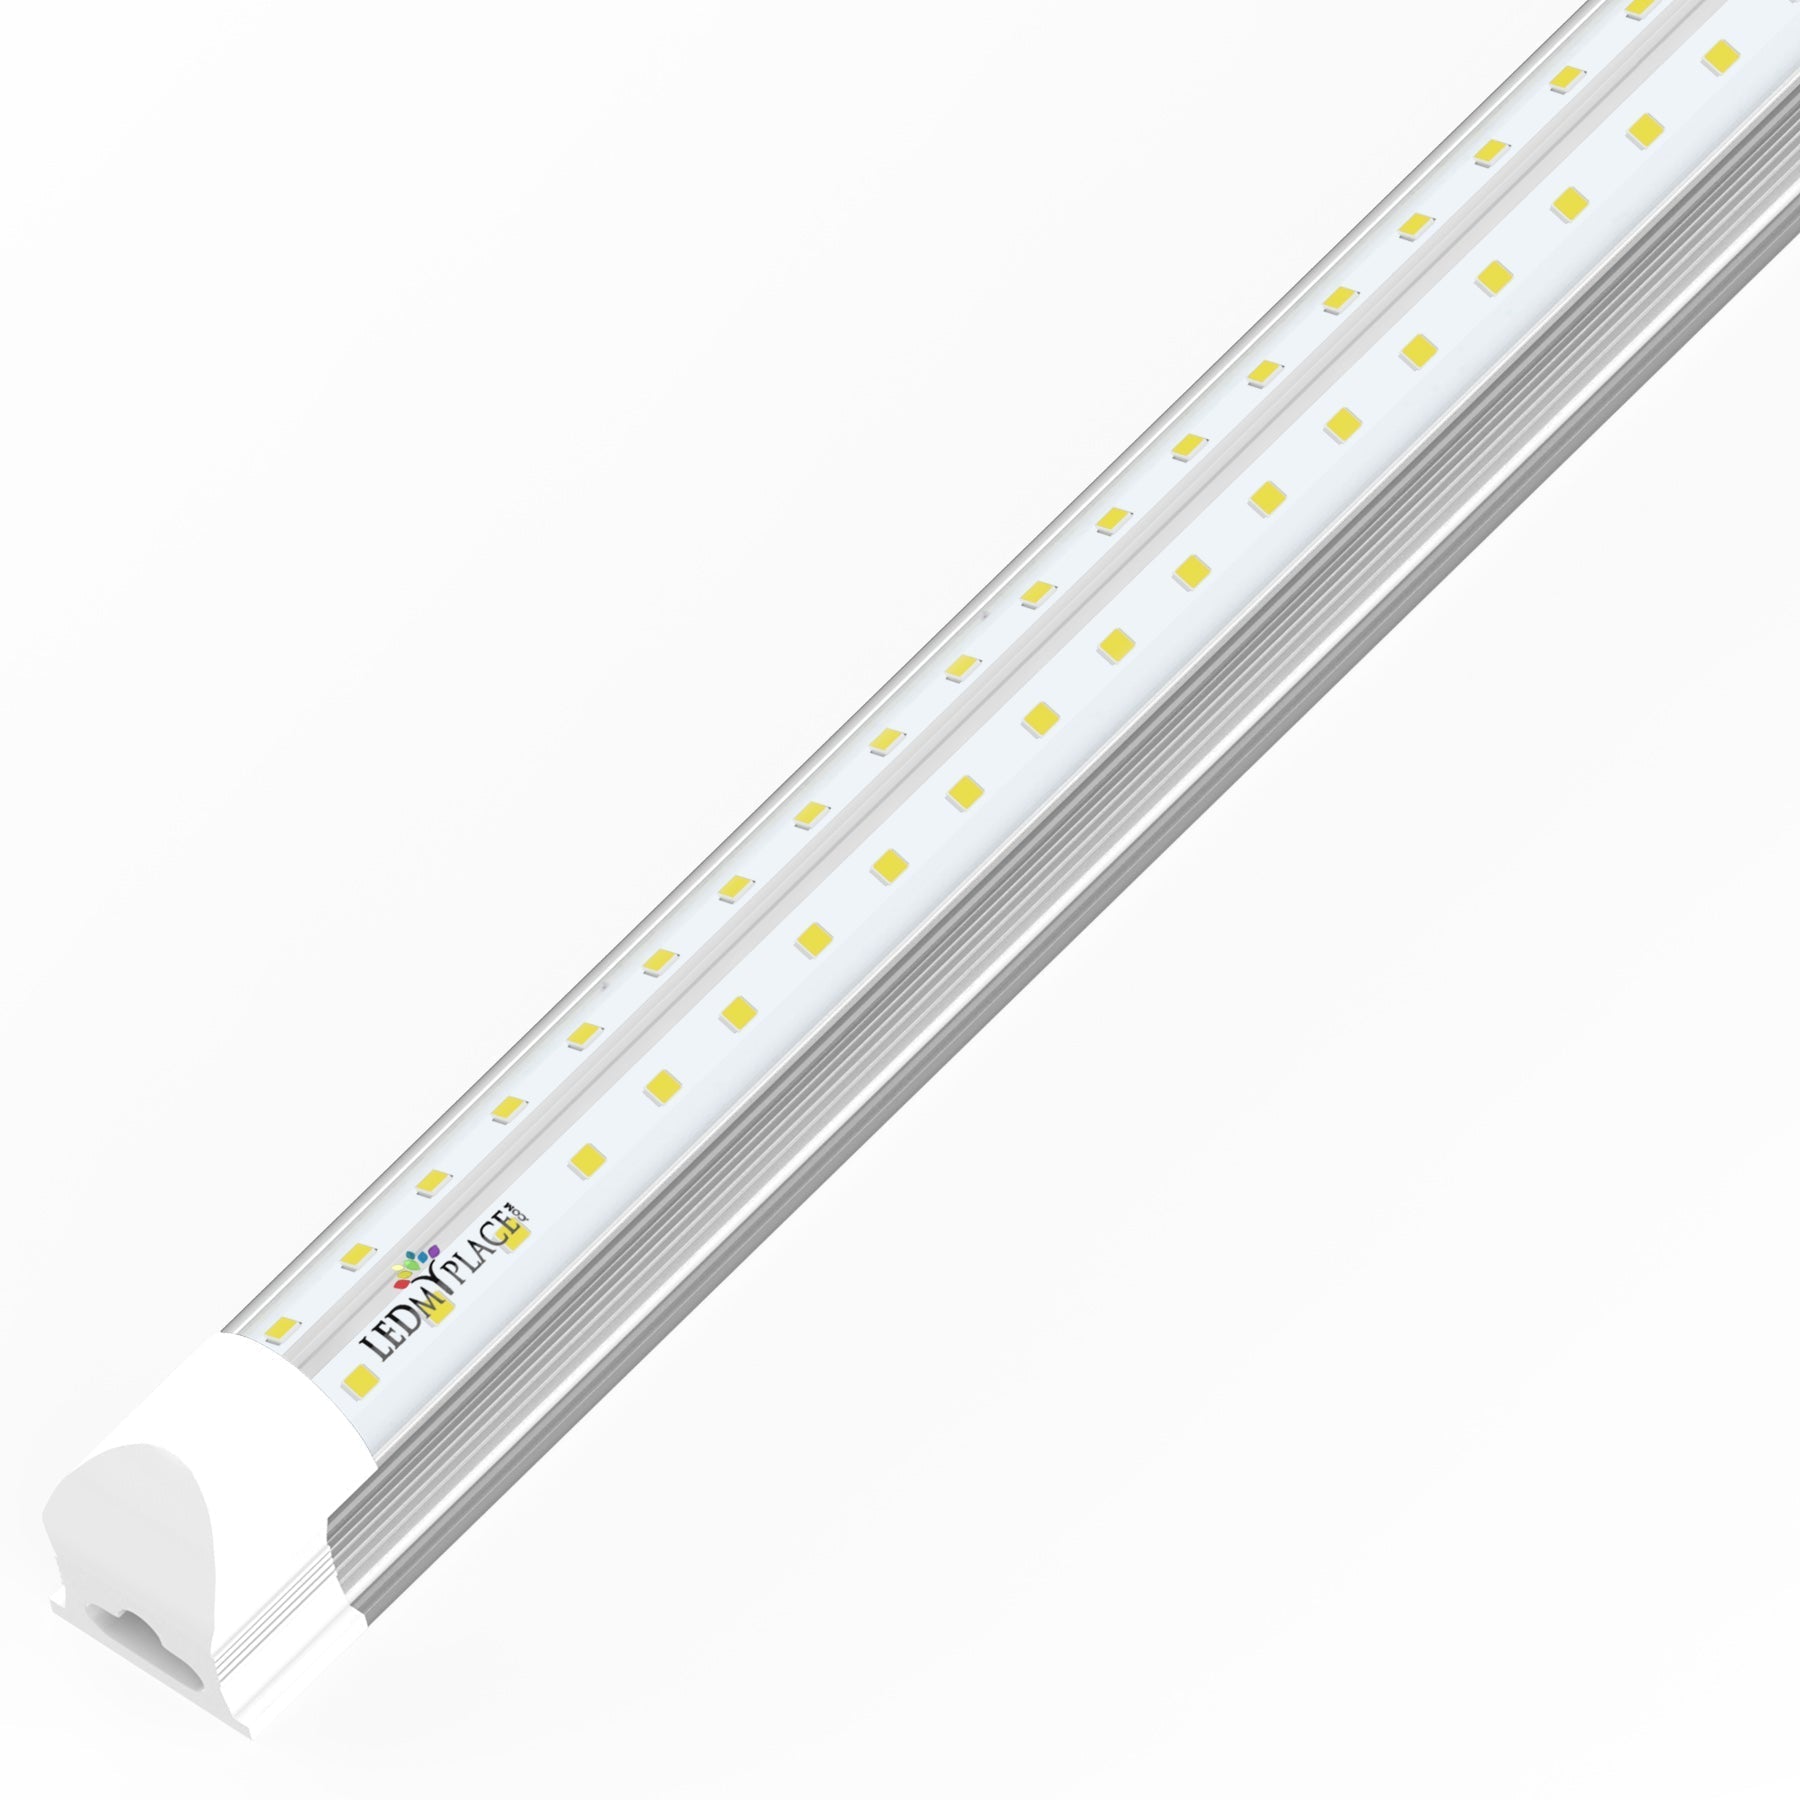 60W 8ft V Shape LED Tube Integrated Lights - 5000k - Clear Cover Super Bright - T8 Utility Shop Light